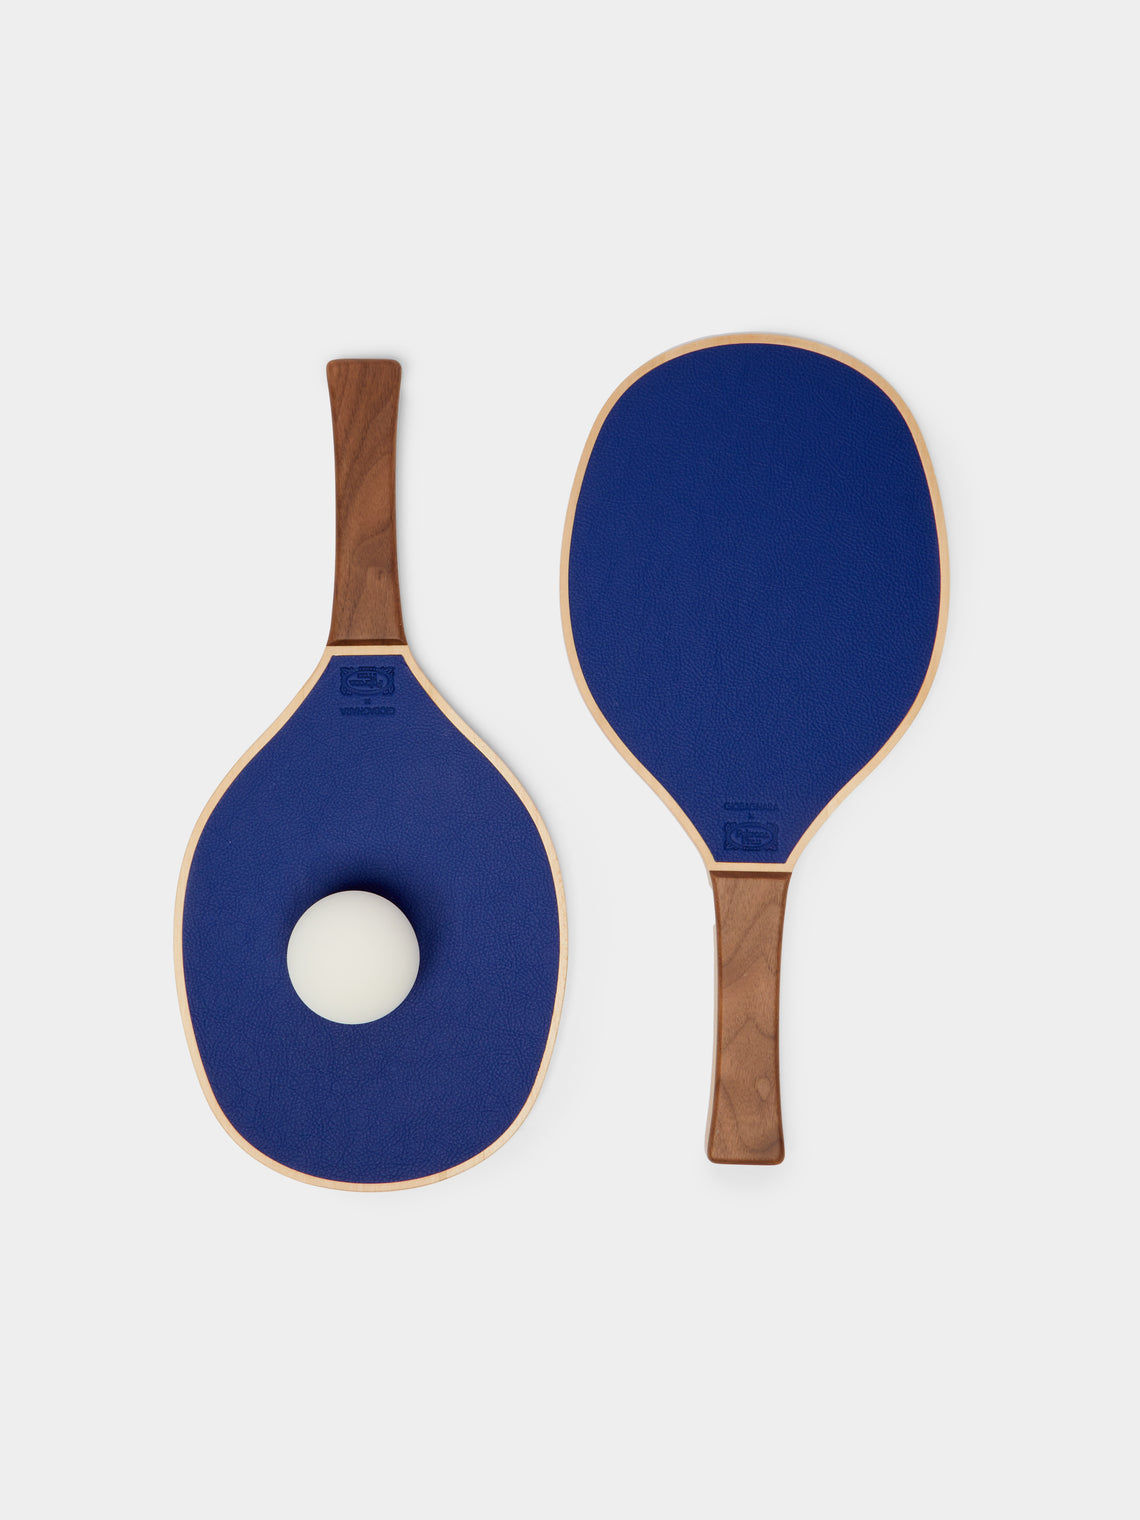 Giobagnara x Poltrona Frau - Leather, Maple and Walnut Rackets with Ball -  - ABASK - 